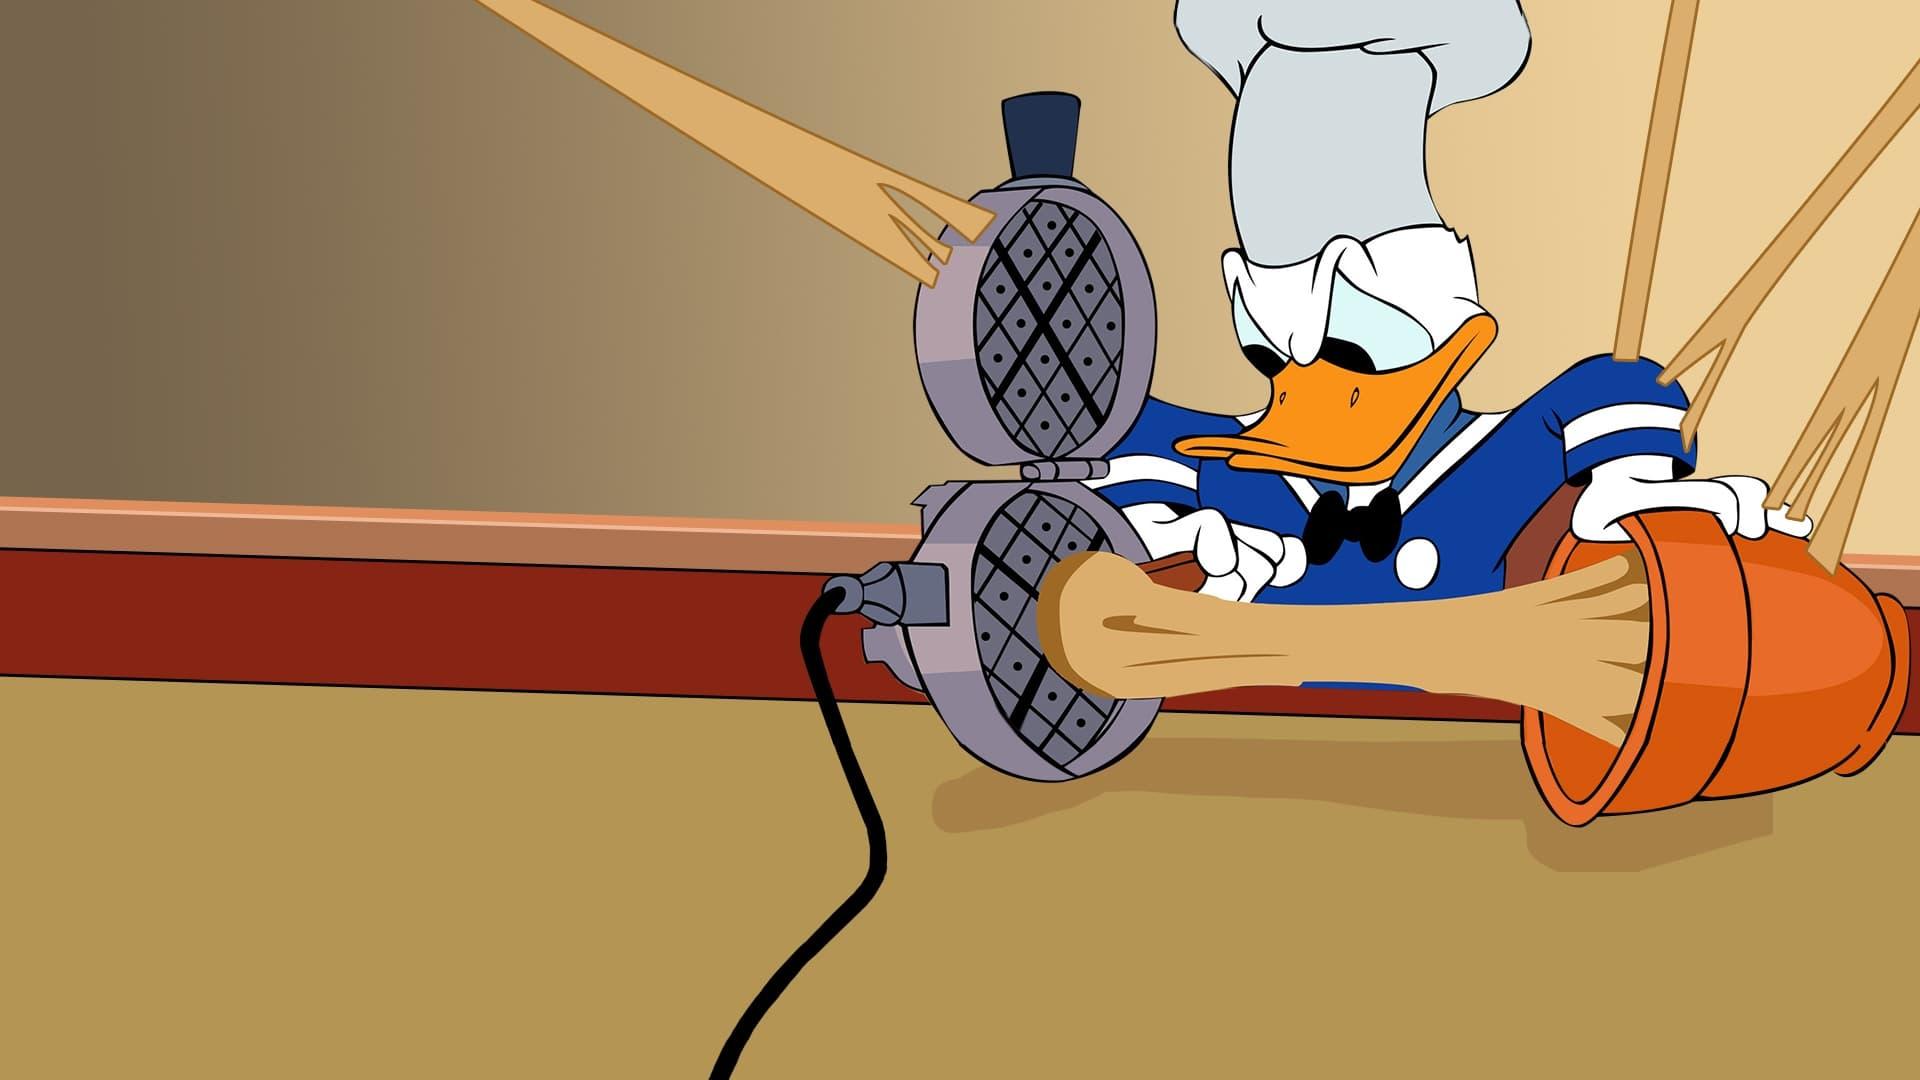 Chef Donald backdrop